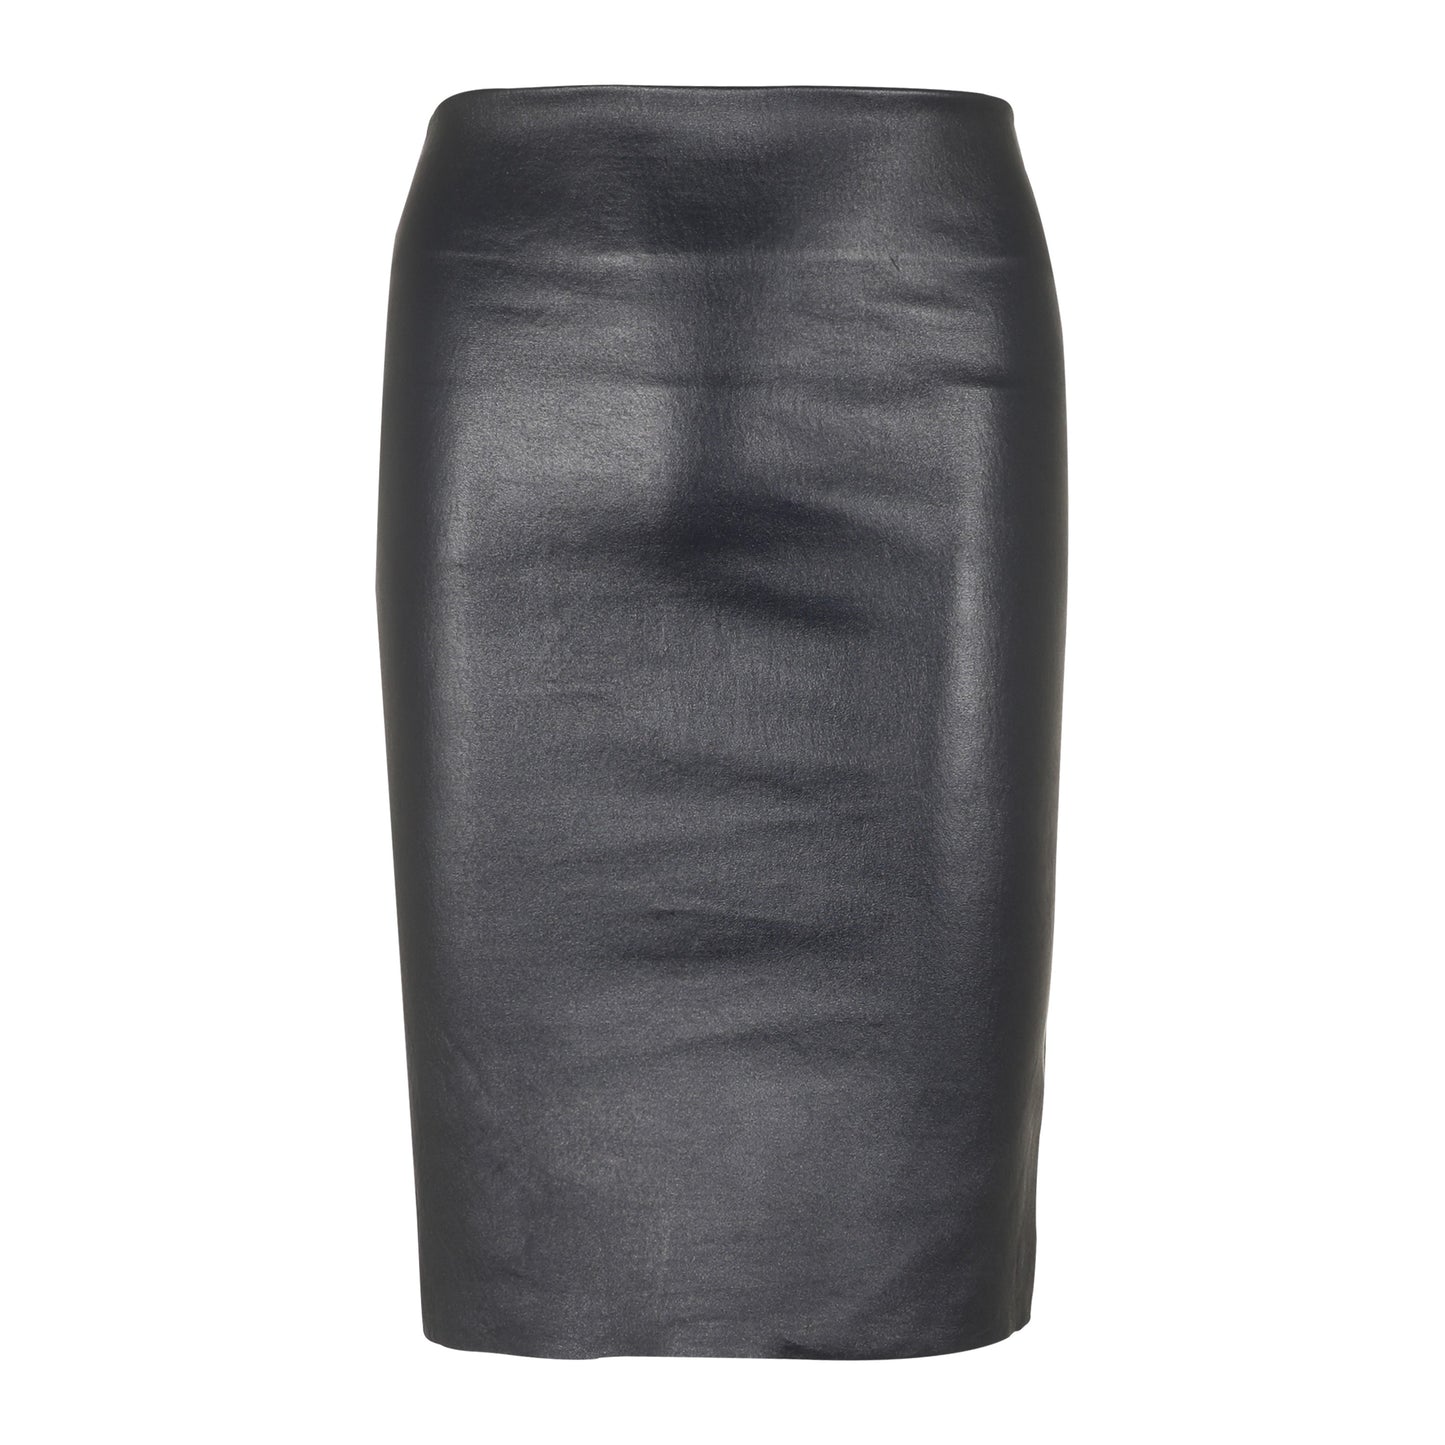 Leather skirts - bordeaux